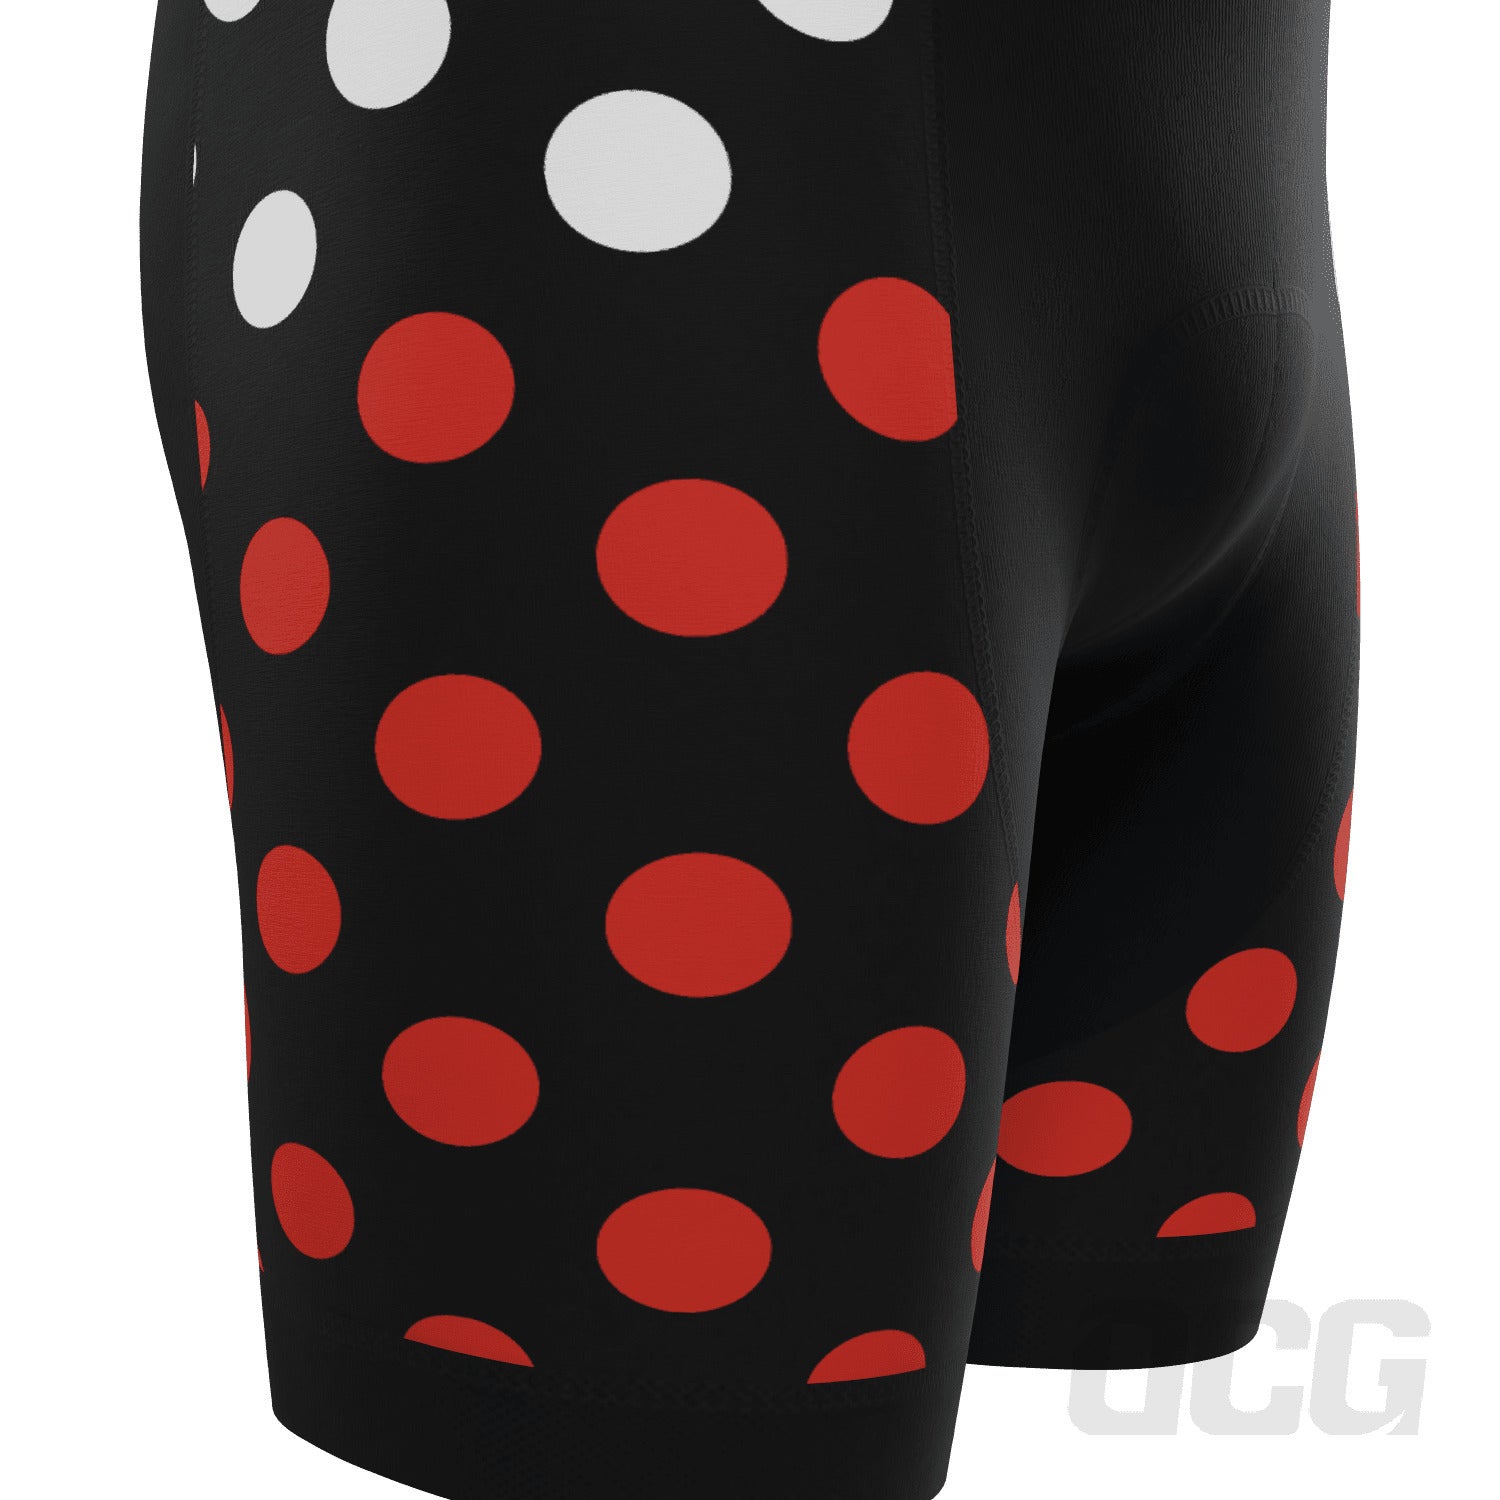 Men's Red Polka Dots on White Gel Padded Cycling Bib